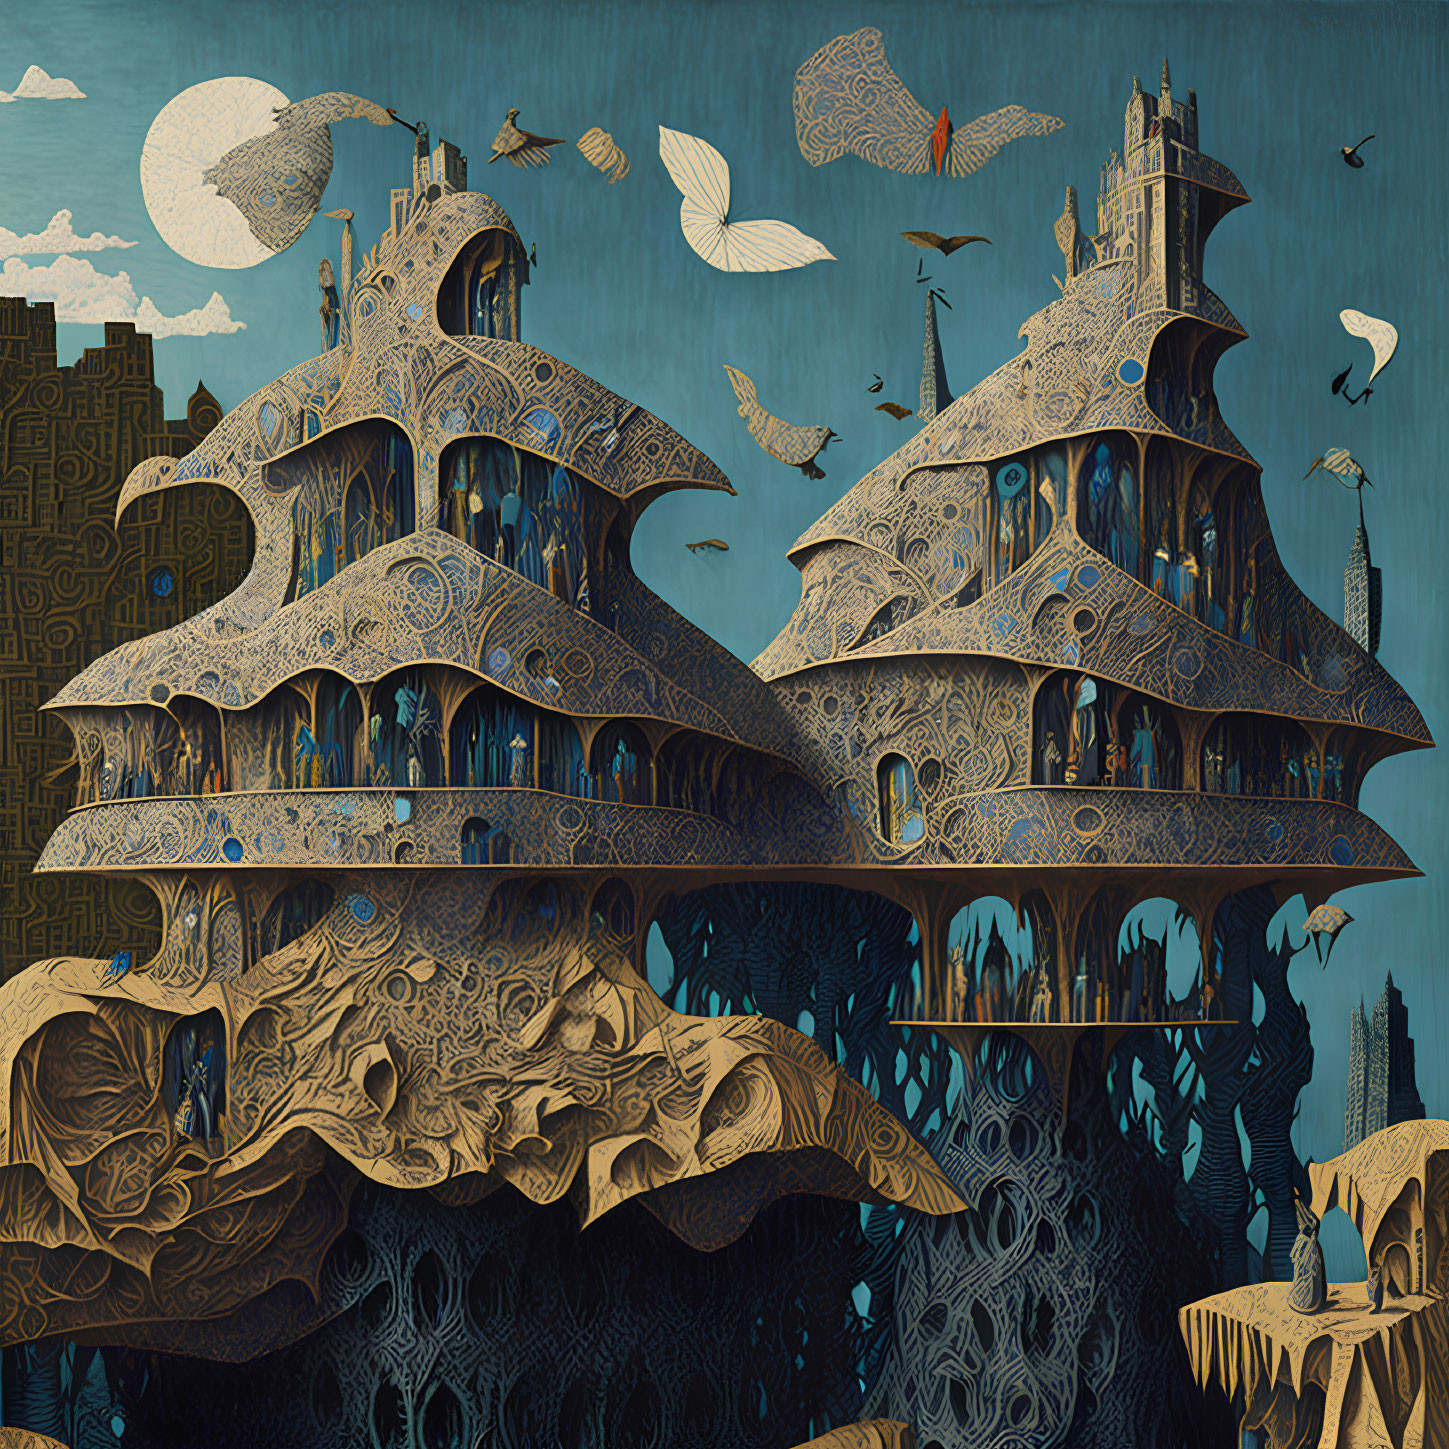 Detailed illustration of fantastical ship with flying books in moonlit sky